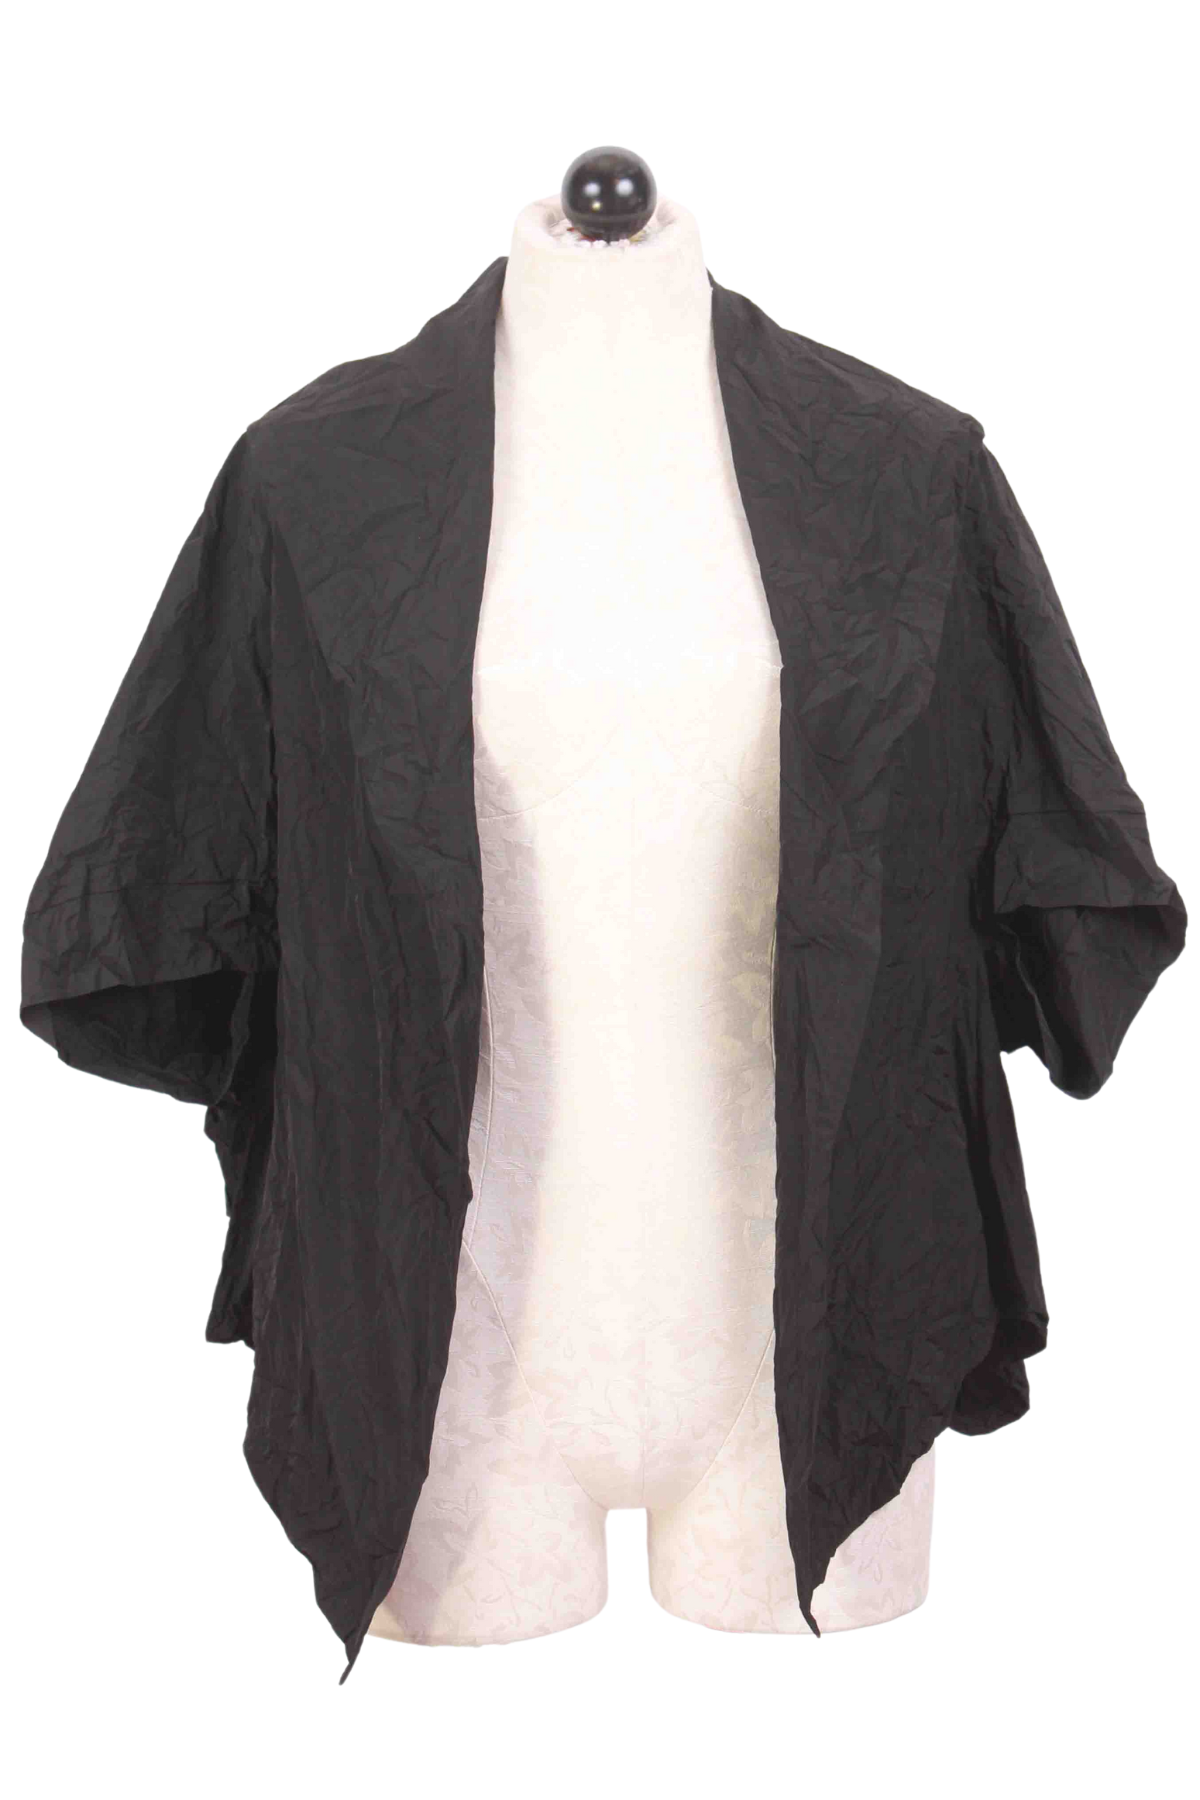 black Short Sleeve Crinkle Open Front Jacket by Reina Lee